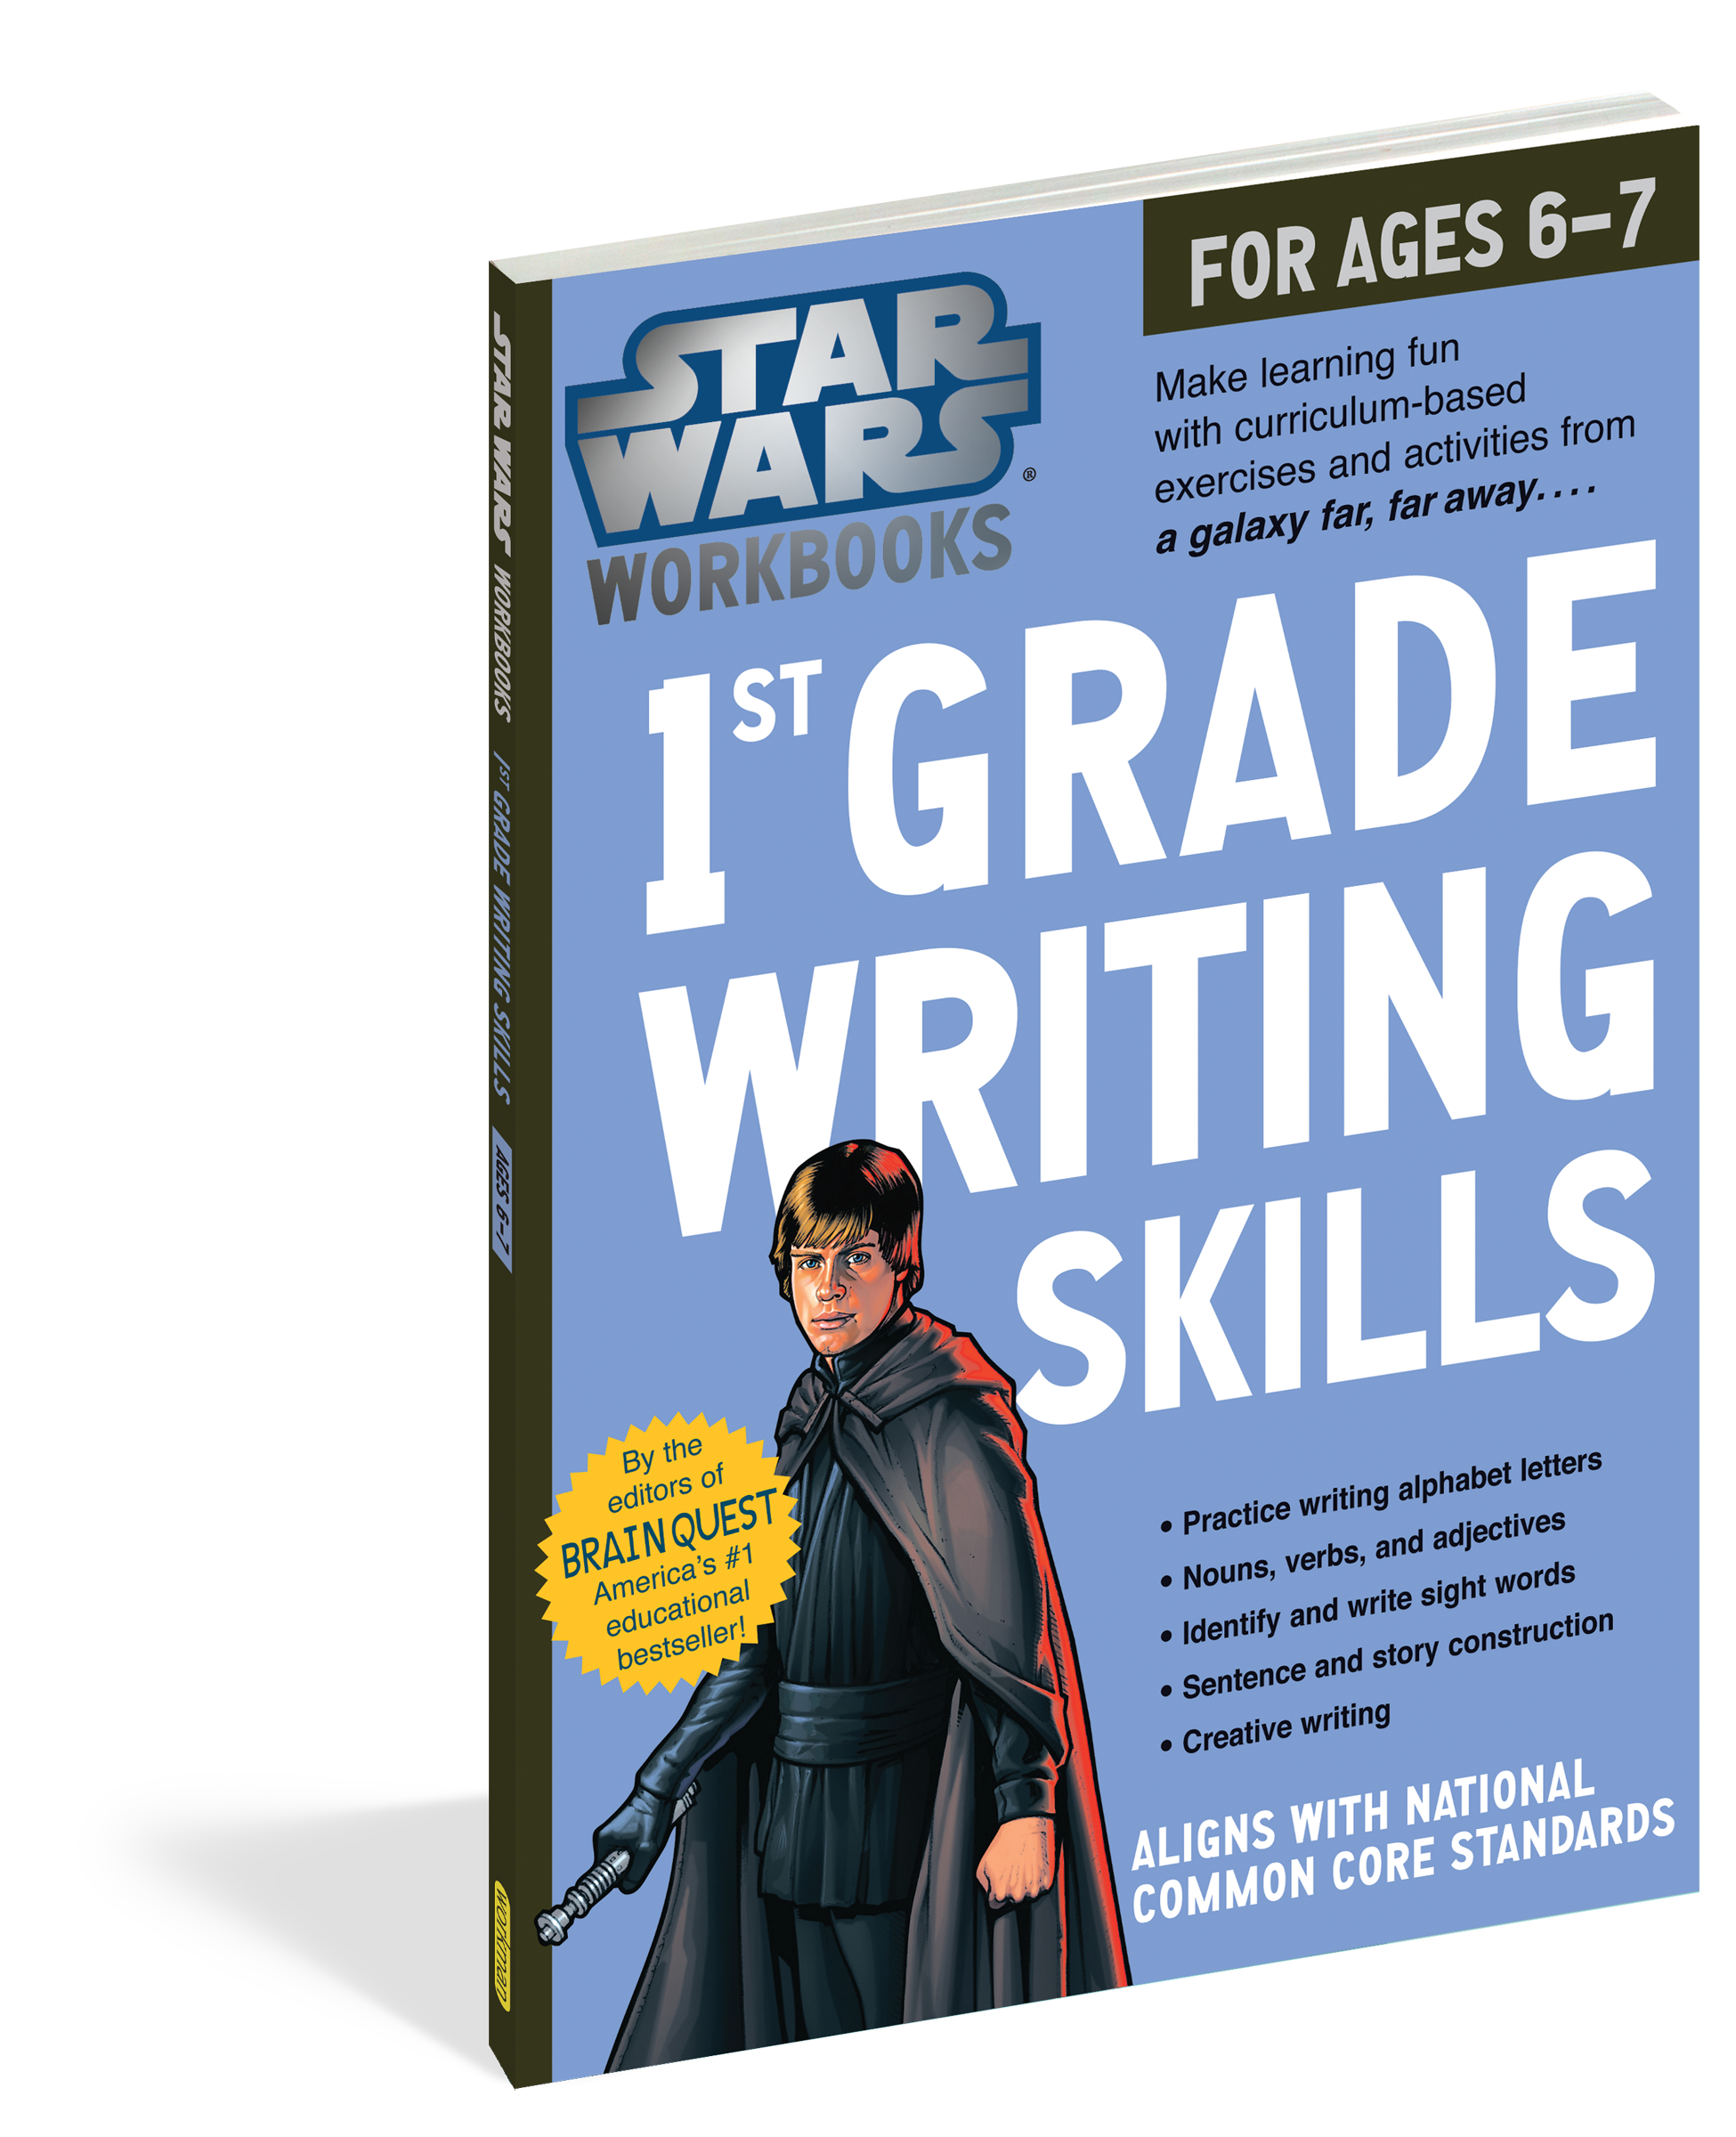 Star Wars Workbook - 1st Grade Writing Skills    